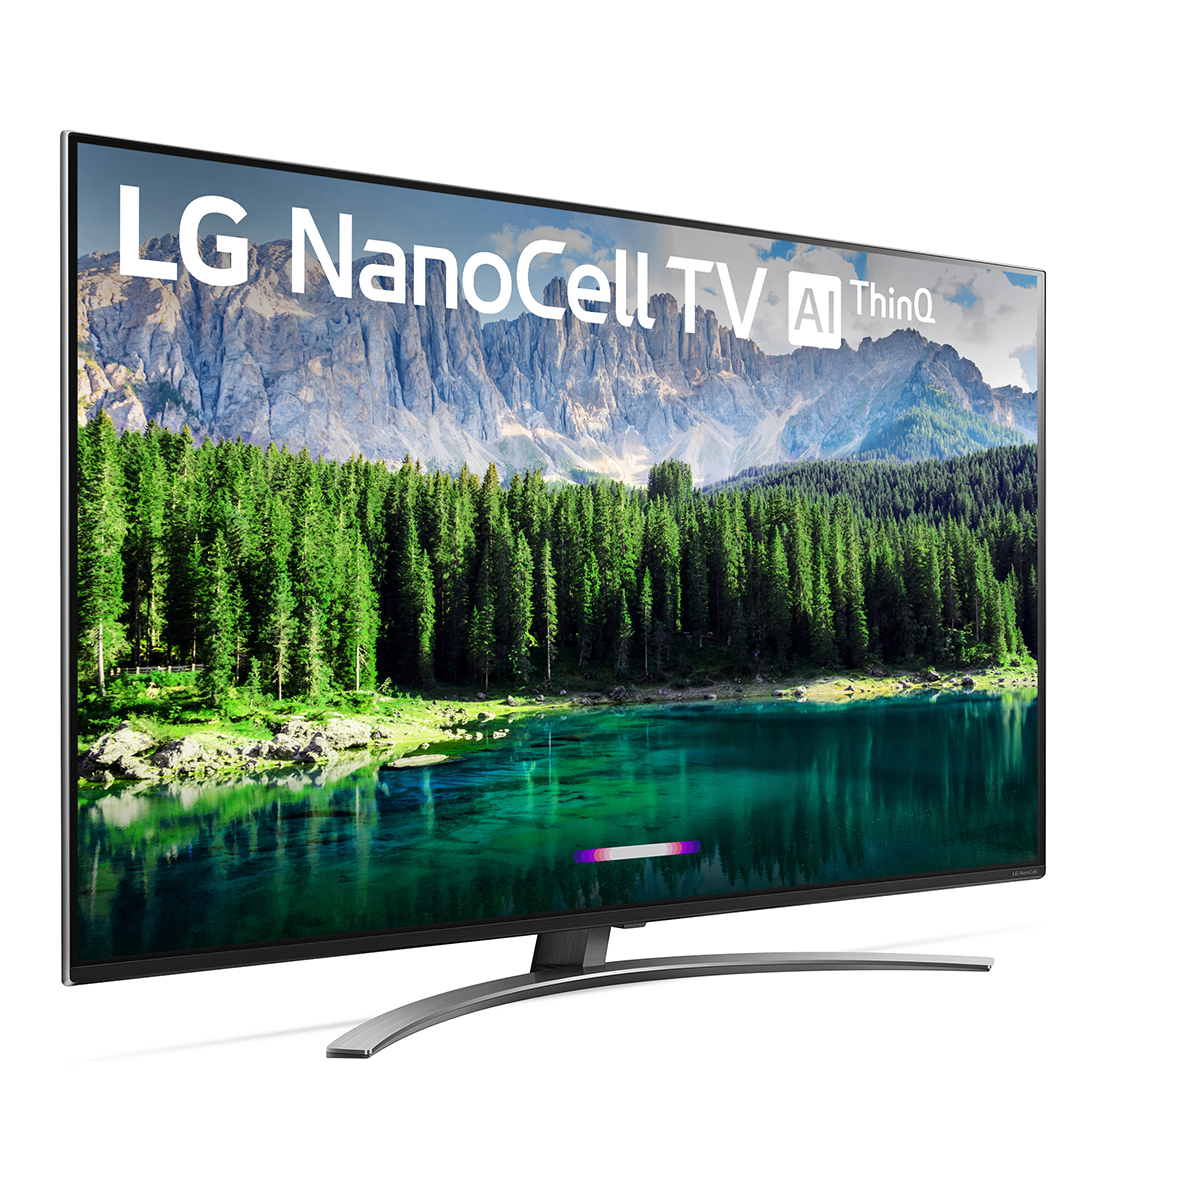 Lg 65 Nano 8 Series 4k Class Smart Uhd Nanocell Tv With Ai Thinq